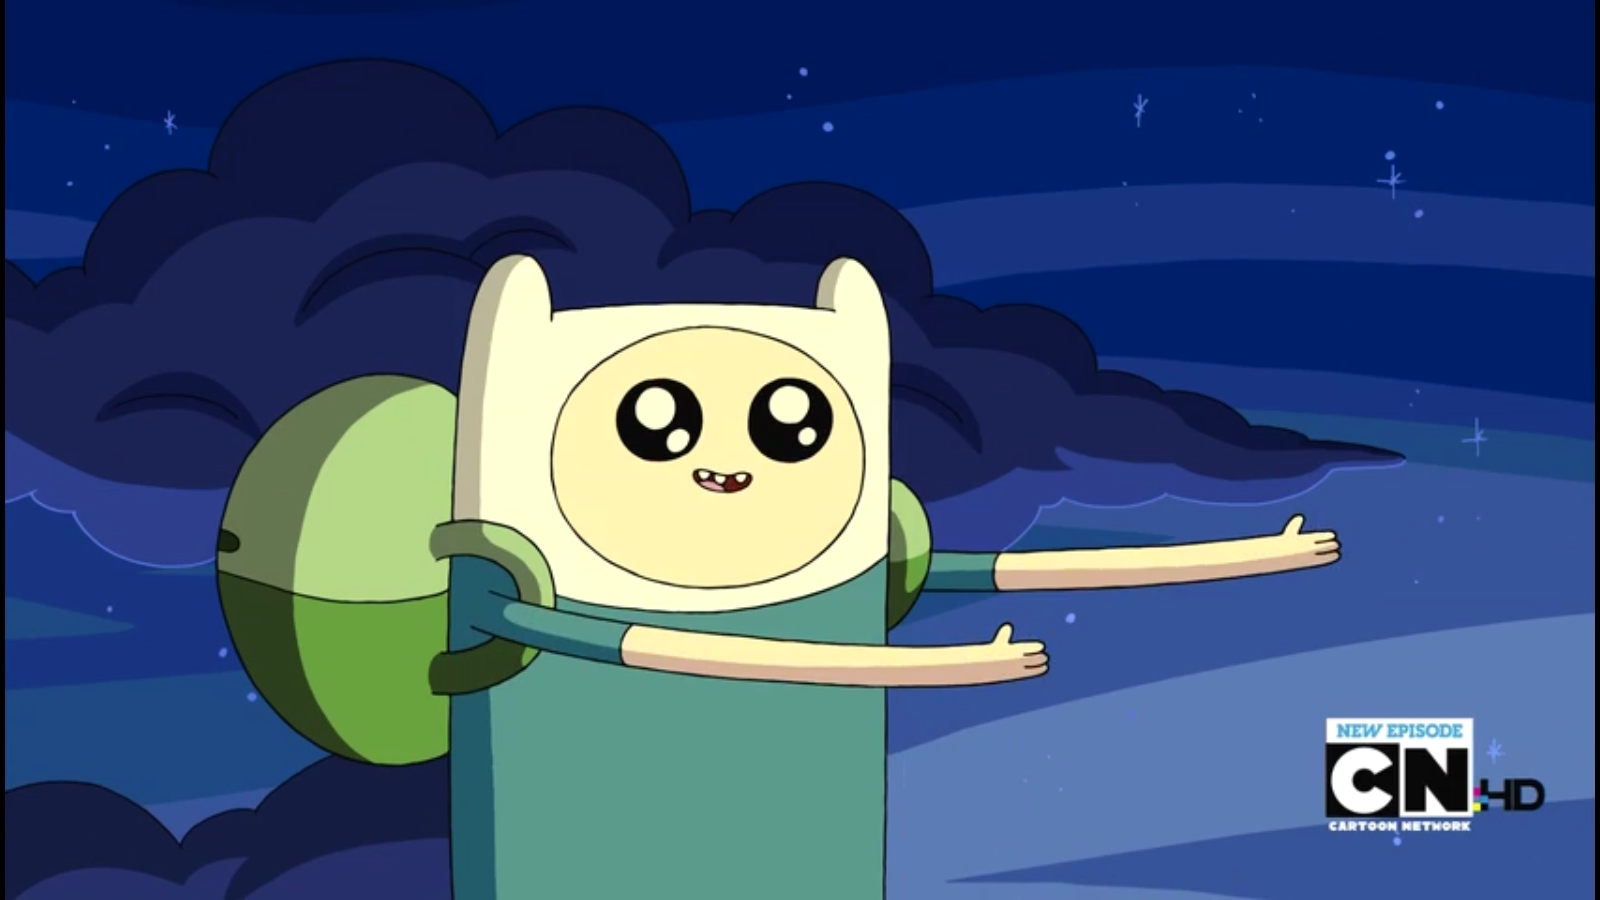 Image S4e16 Finn wants to hug Adventure Time Wiki